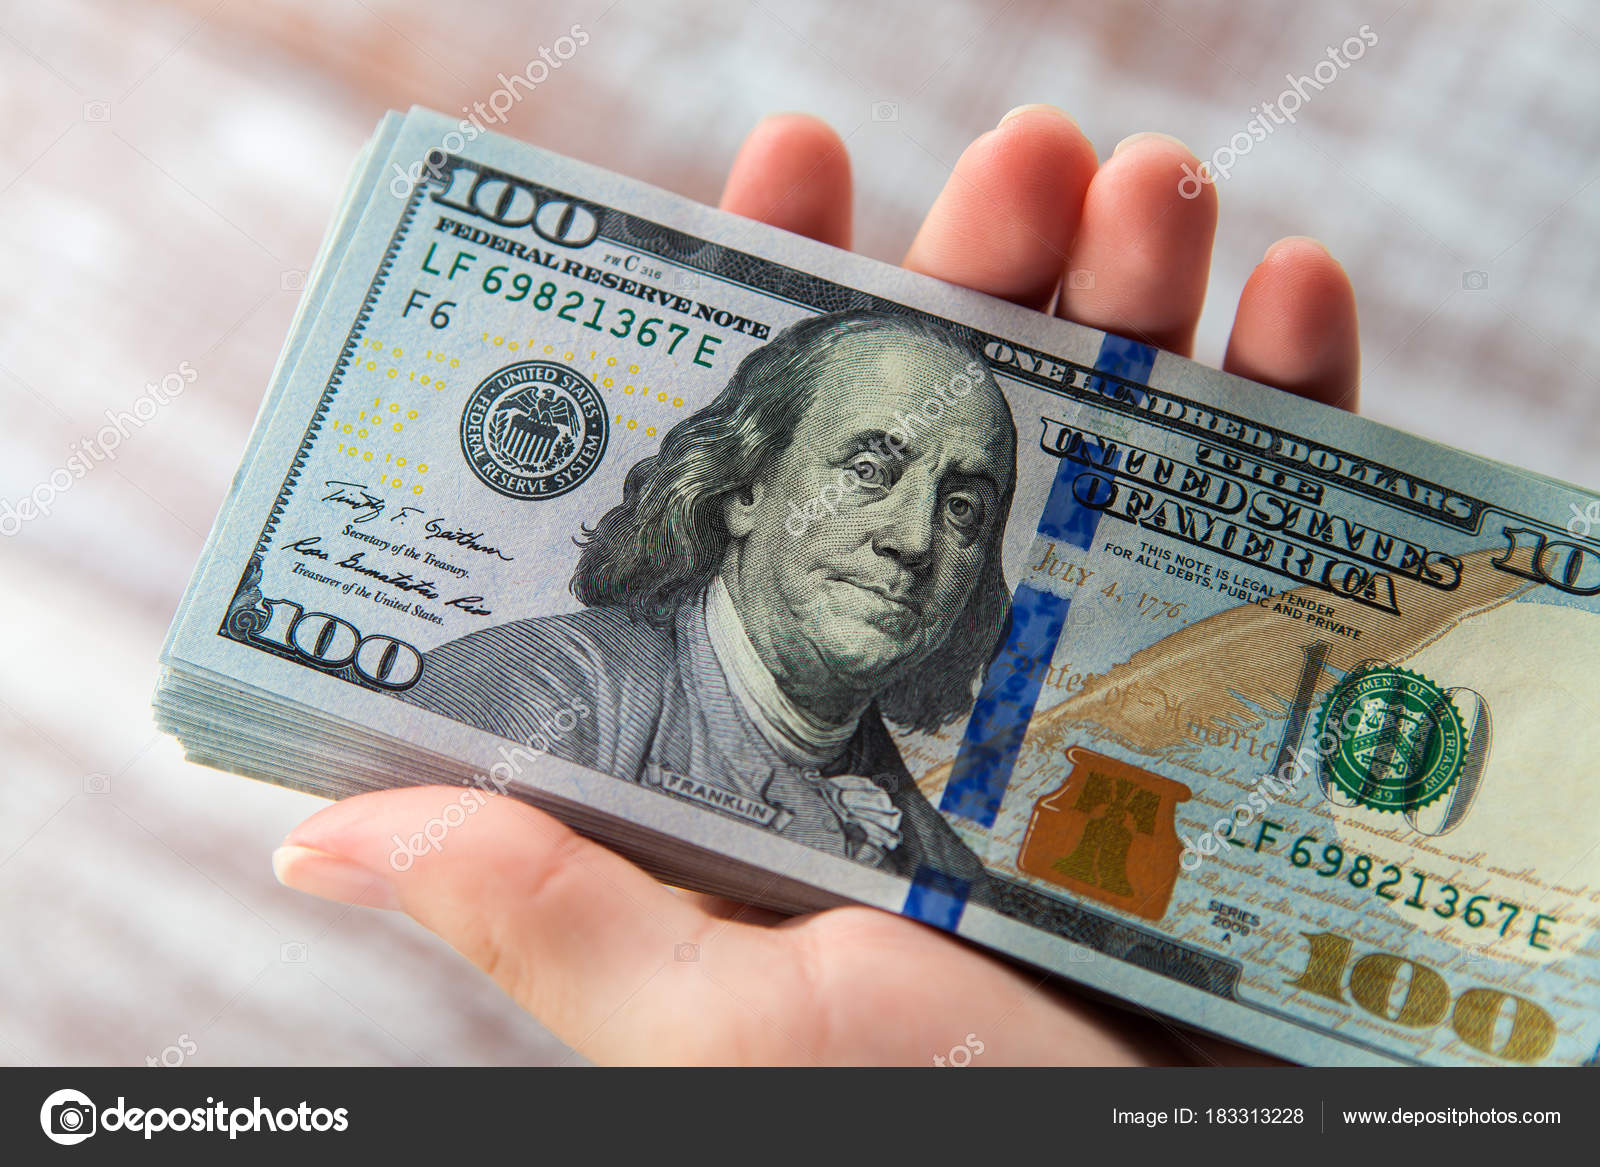 https://st3.depositphotos.com/1001757/18331/i/1600/depositphotos_183313228-stock-photo-woman-holding-dollars.jpg